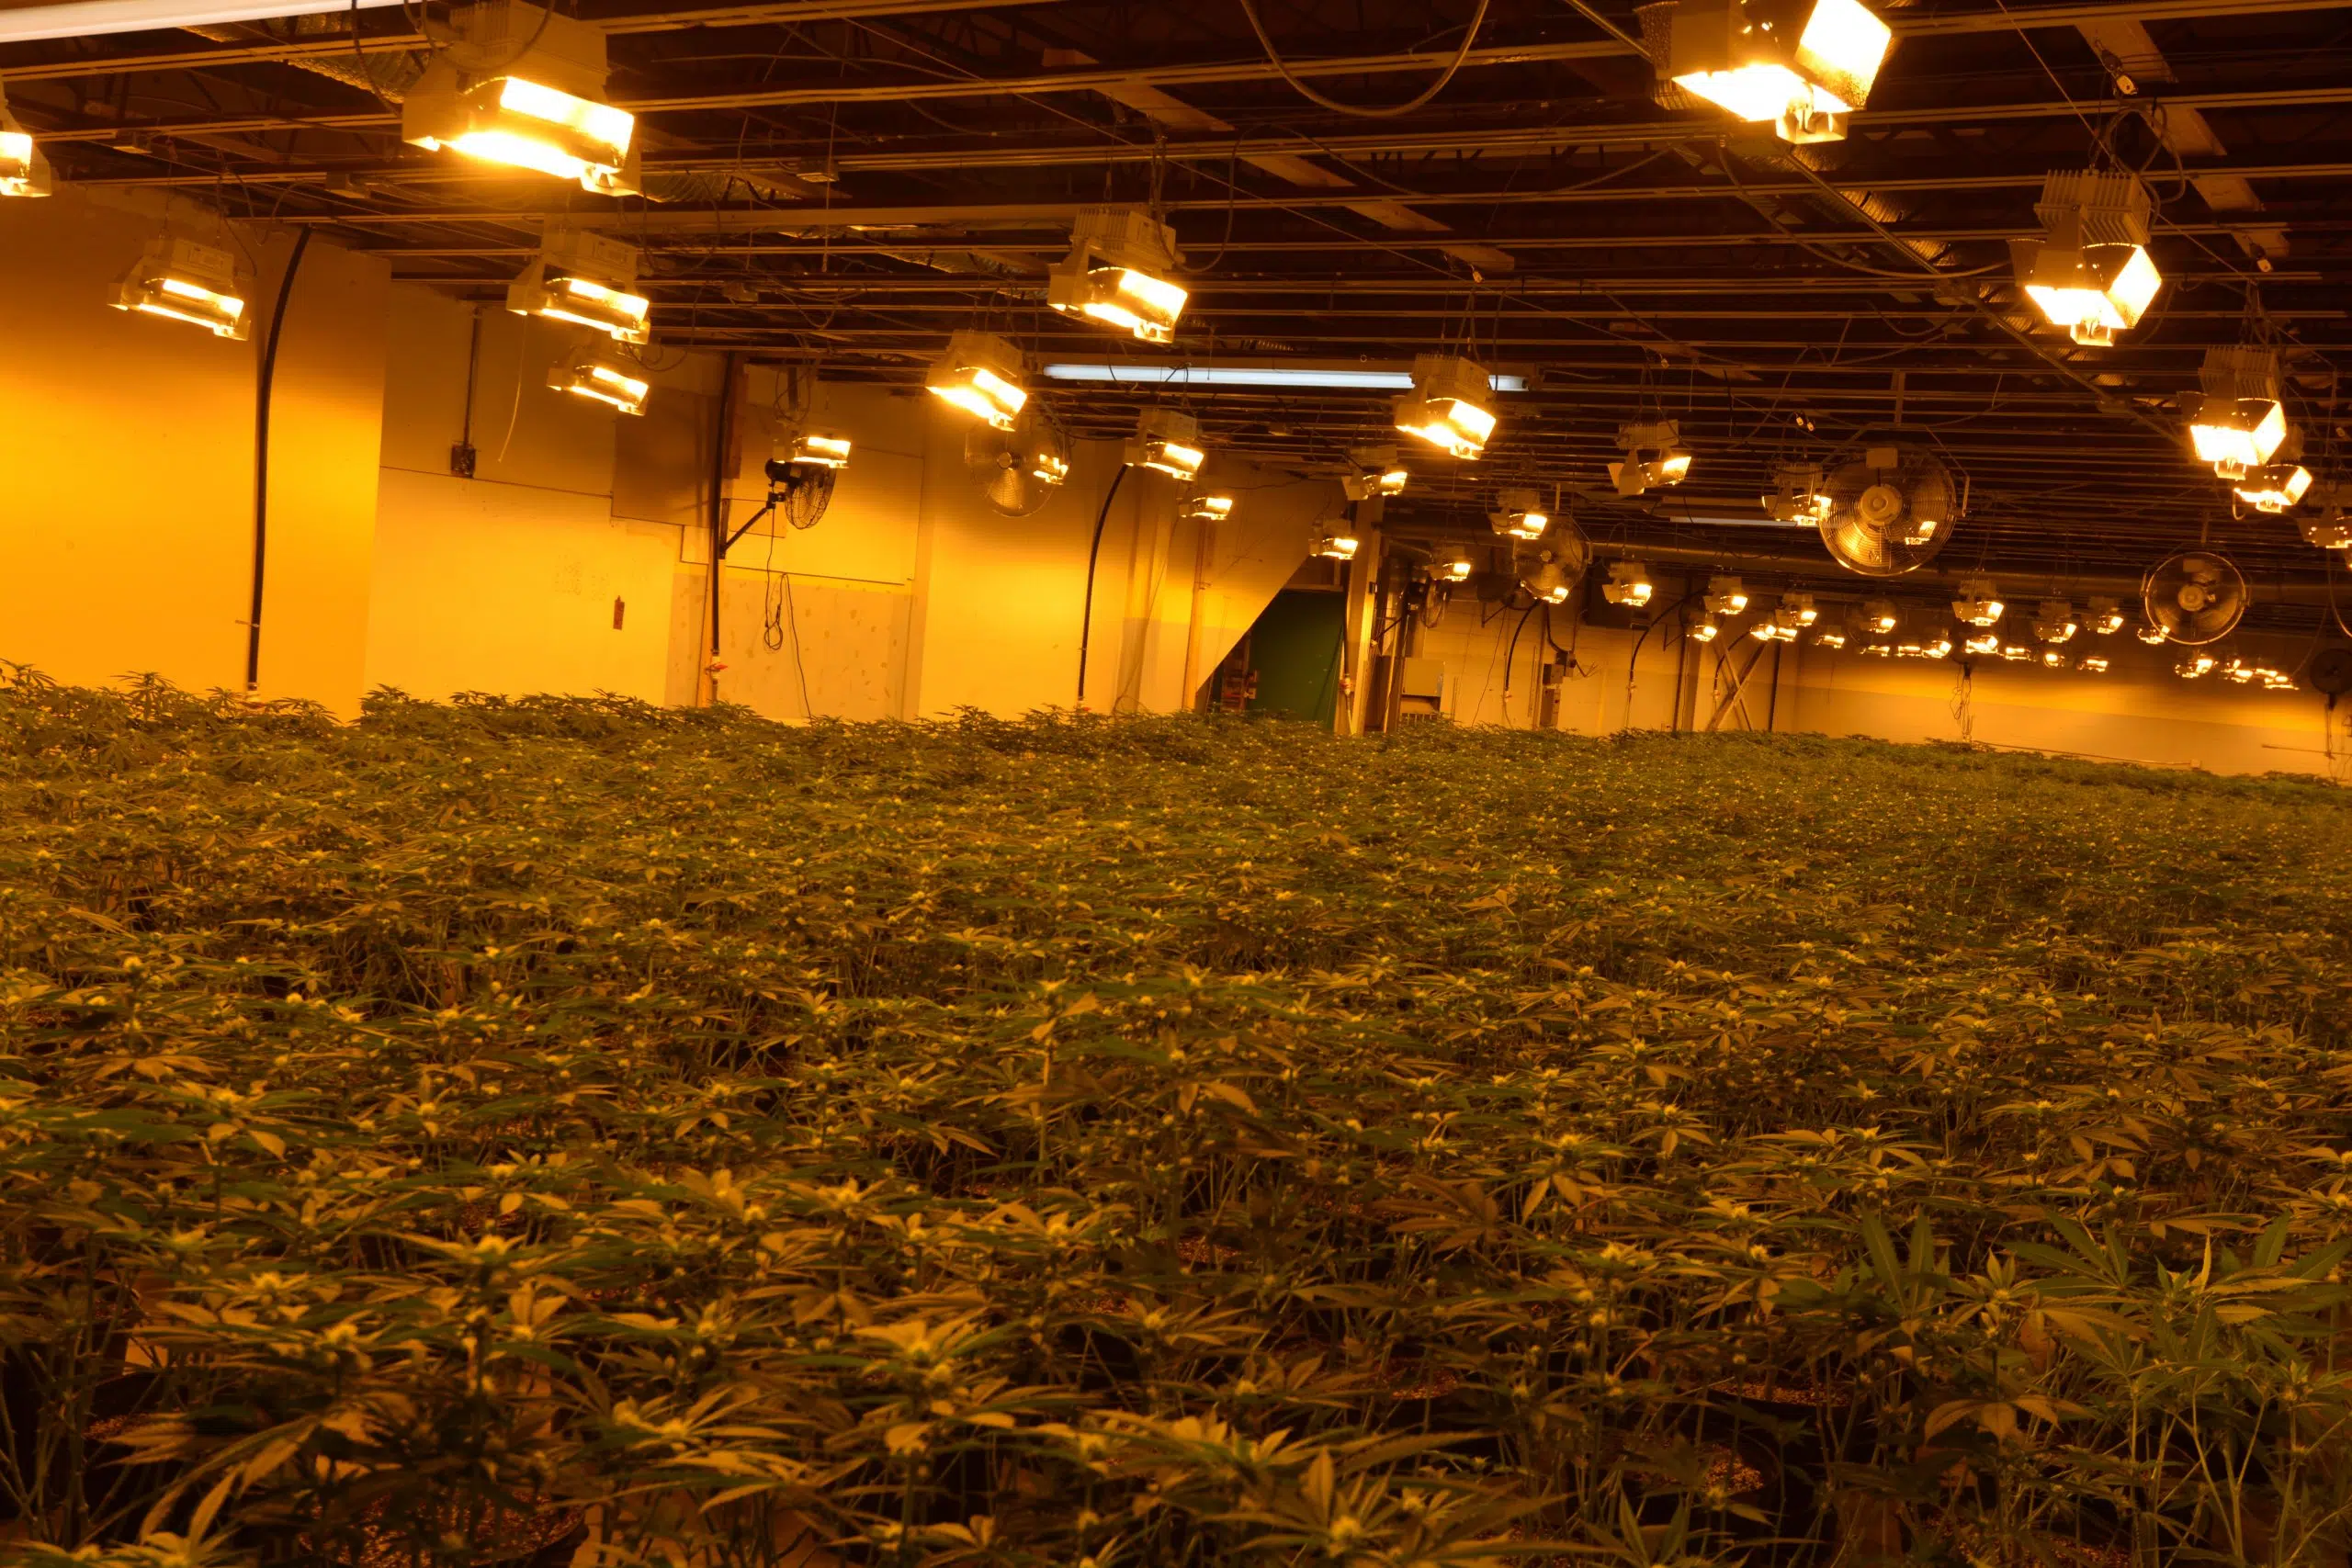 Belleville Police seize over 7,000 marijuana plants